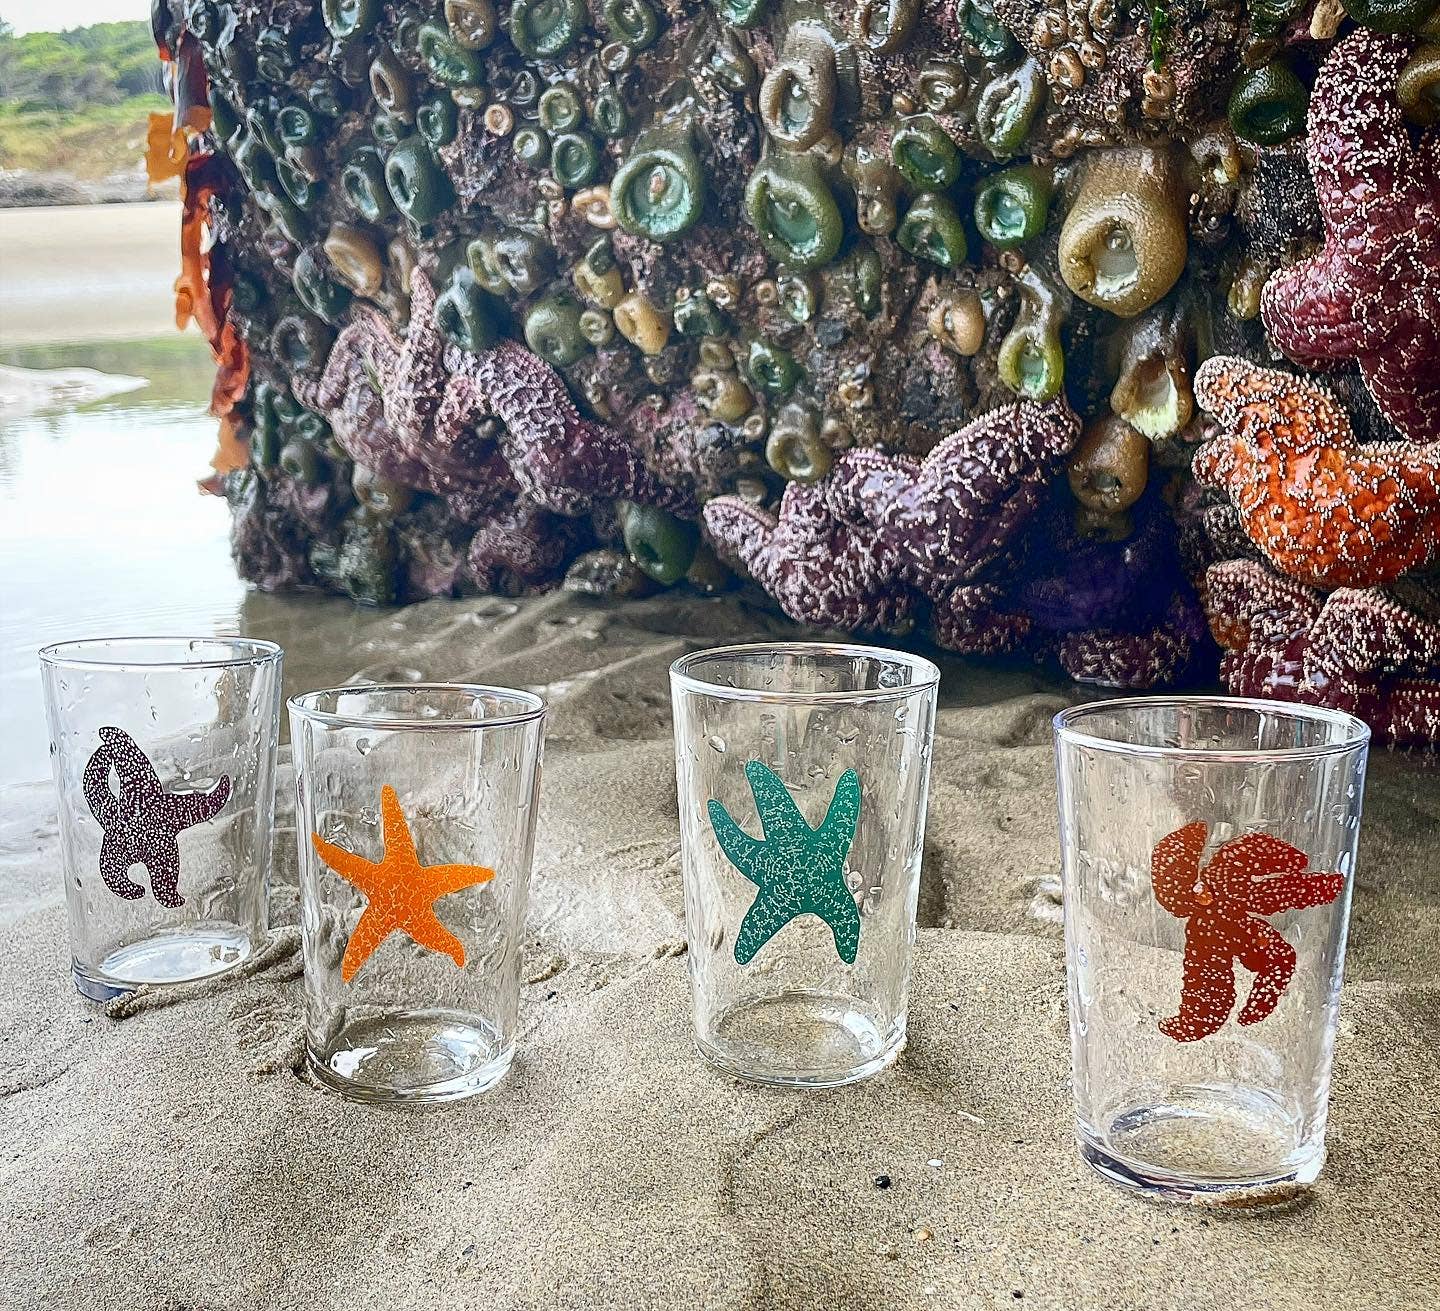 starfish on a shot glass